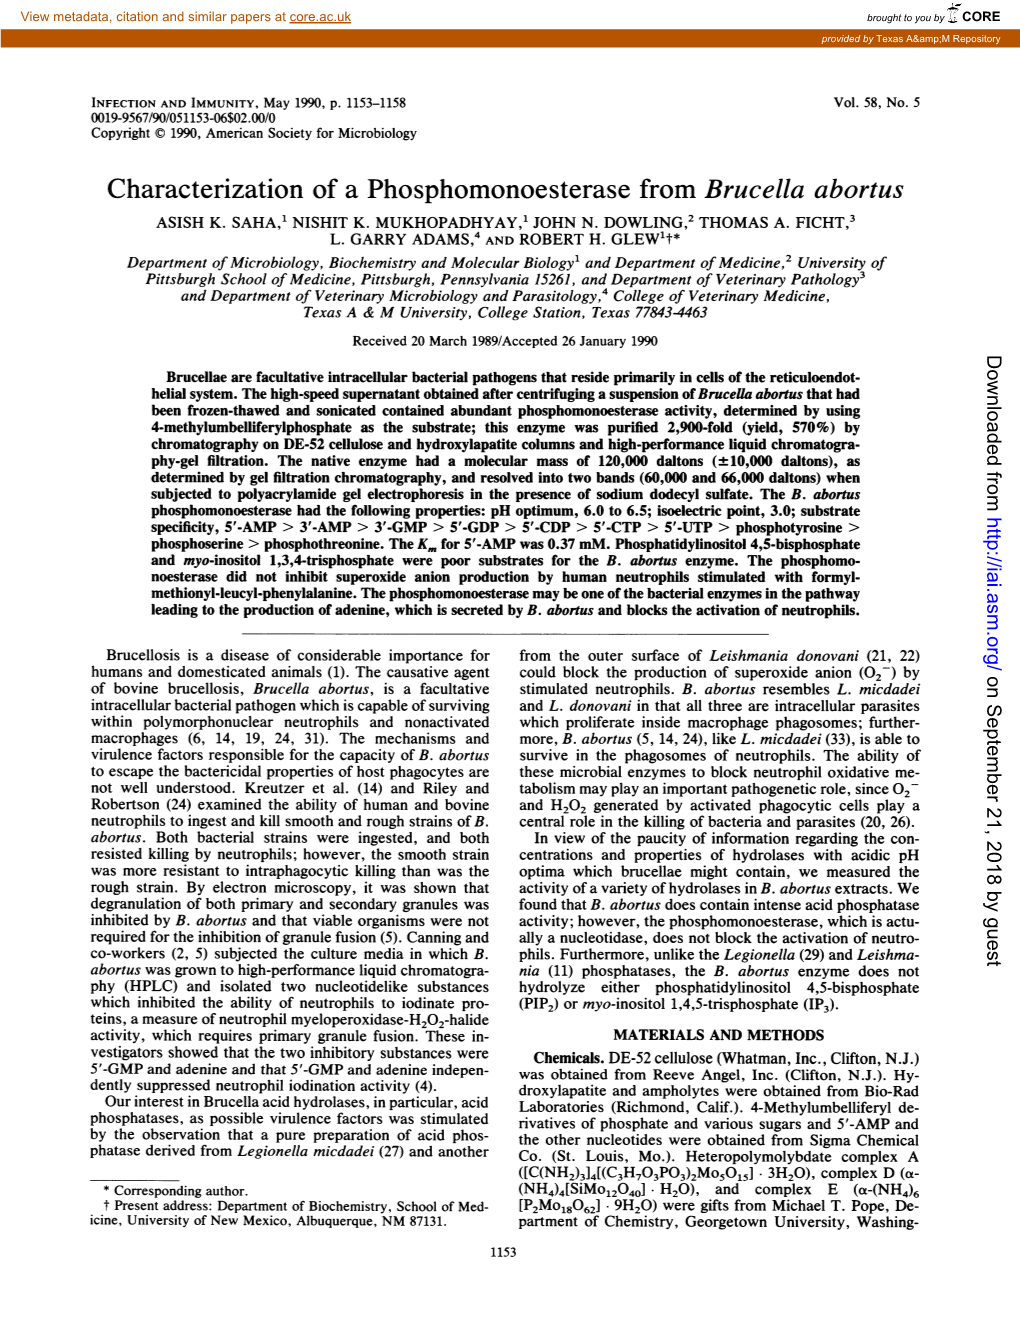 Characterization of a Phosphomonoesterase from Brucella Abortus ASISH K